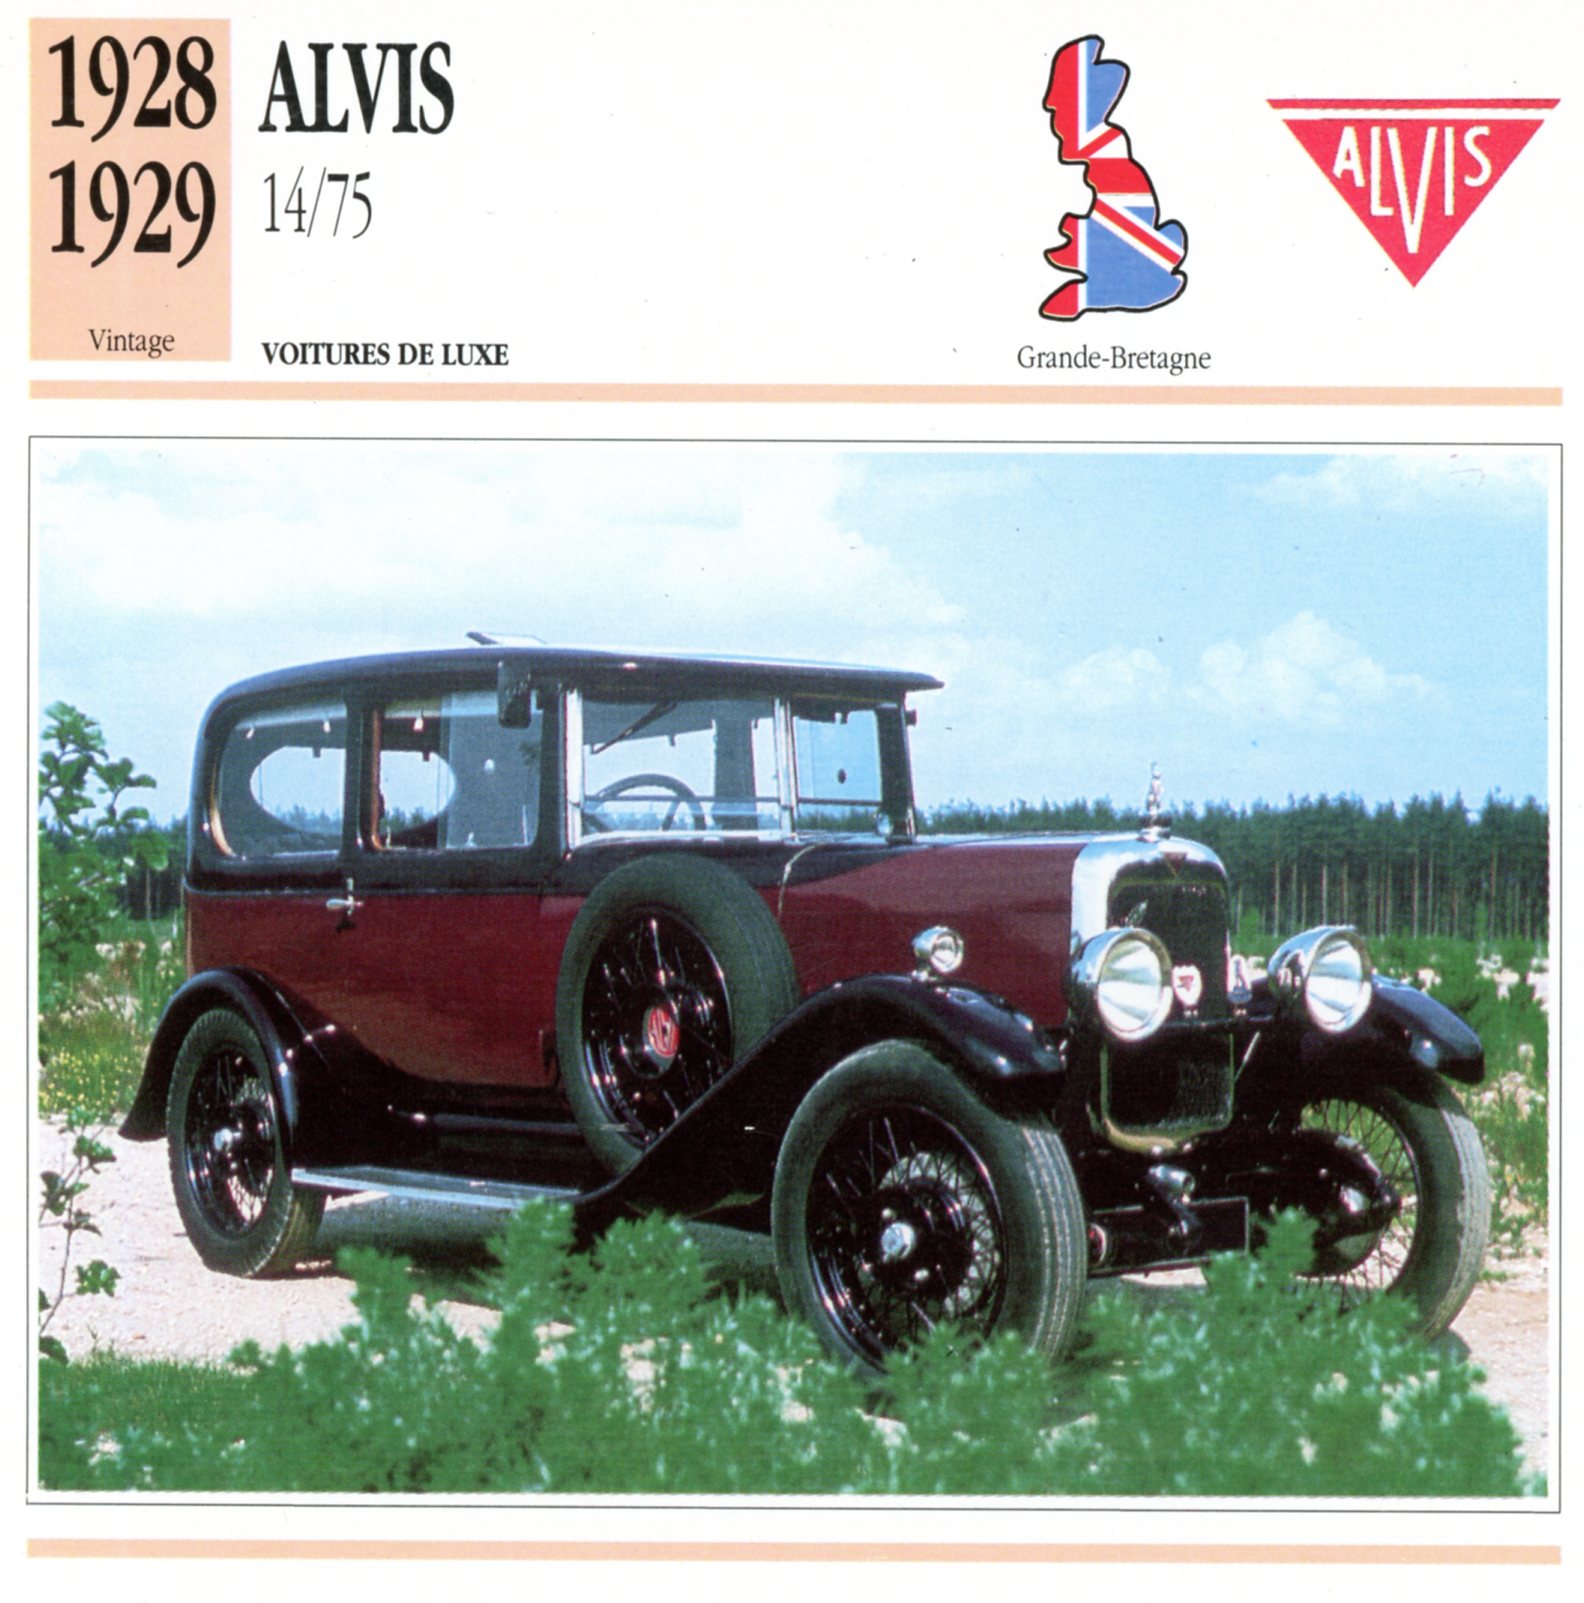 FICHE-AUTO-ALVIS-14/75-1929-LEMASTERBROCKERS-CARS-CARD